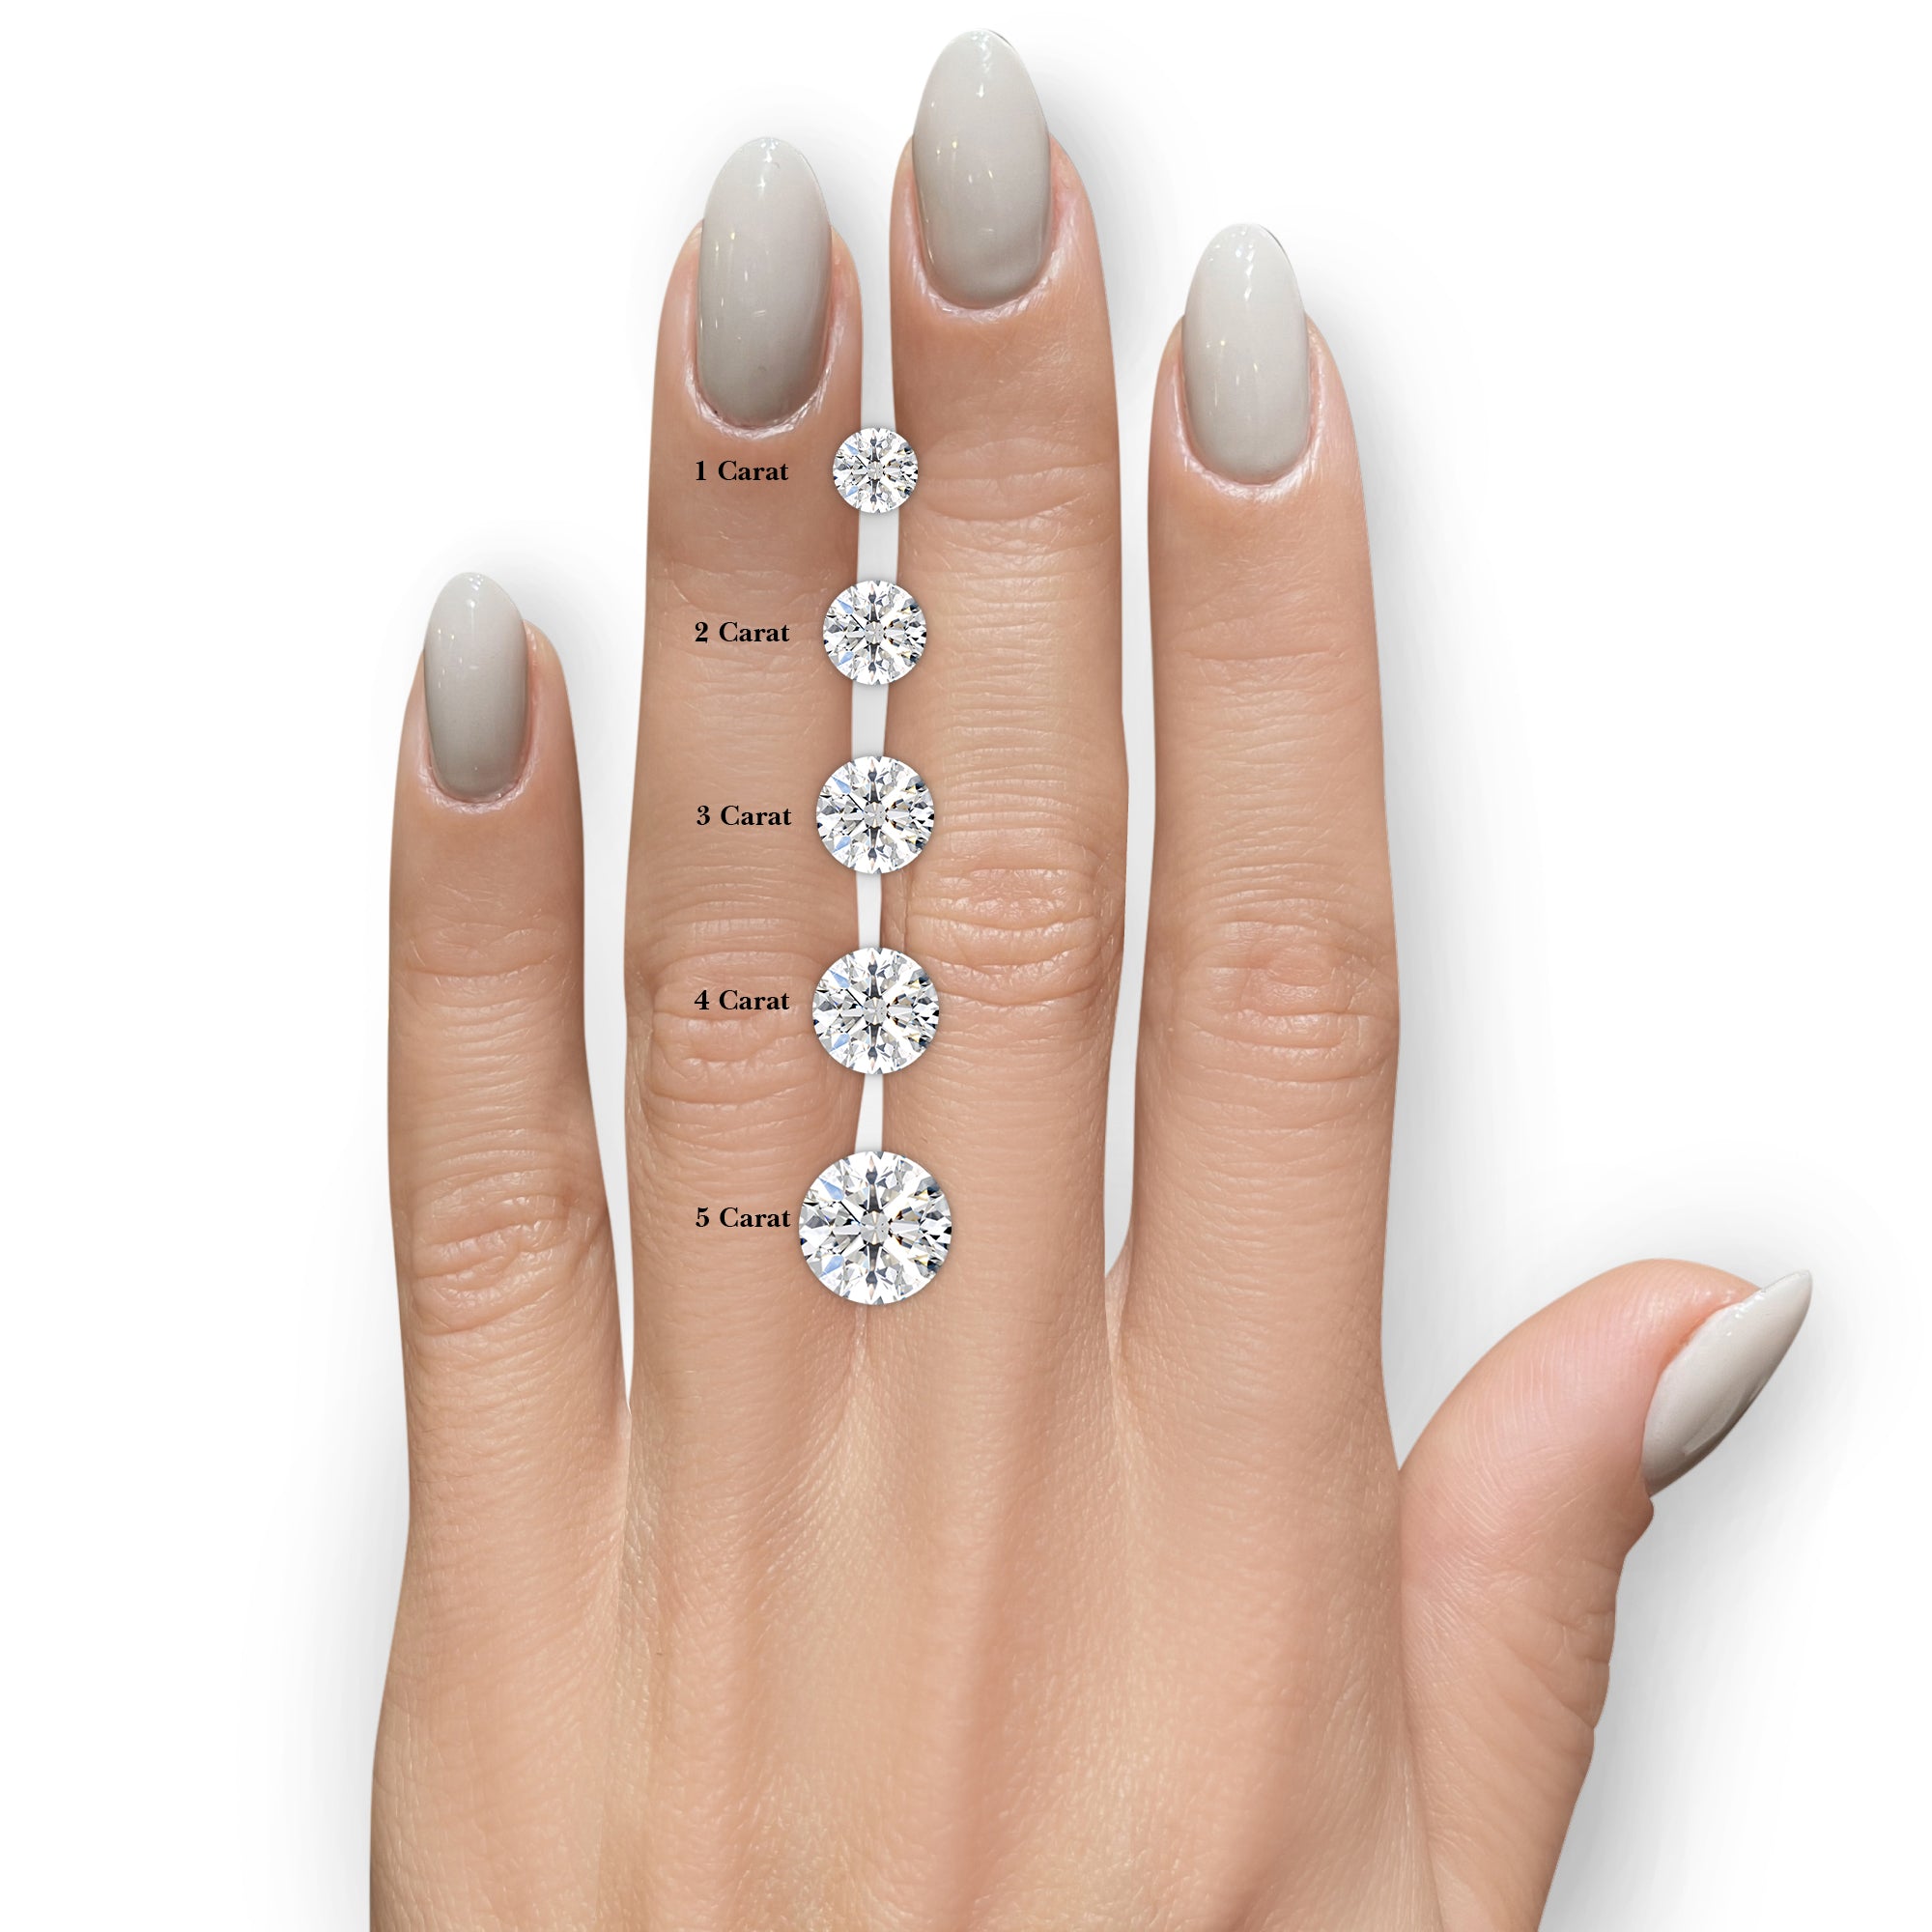 Veronica Diamond Engagement Ring -18K White Gold